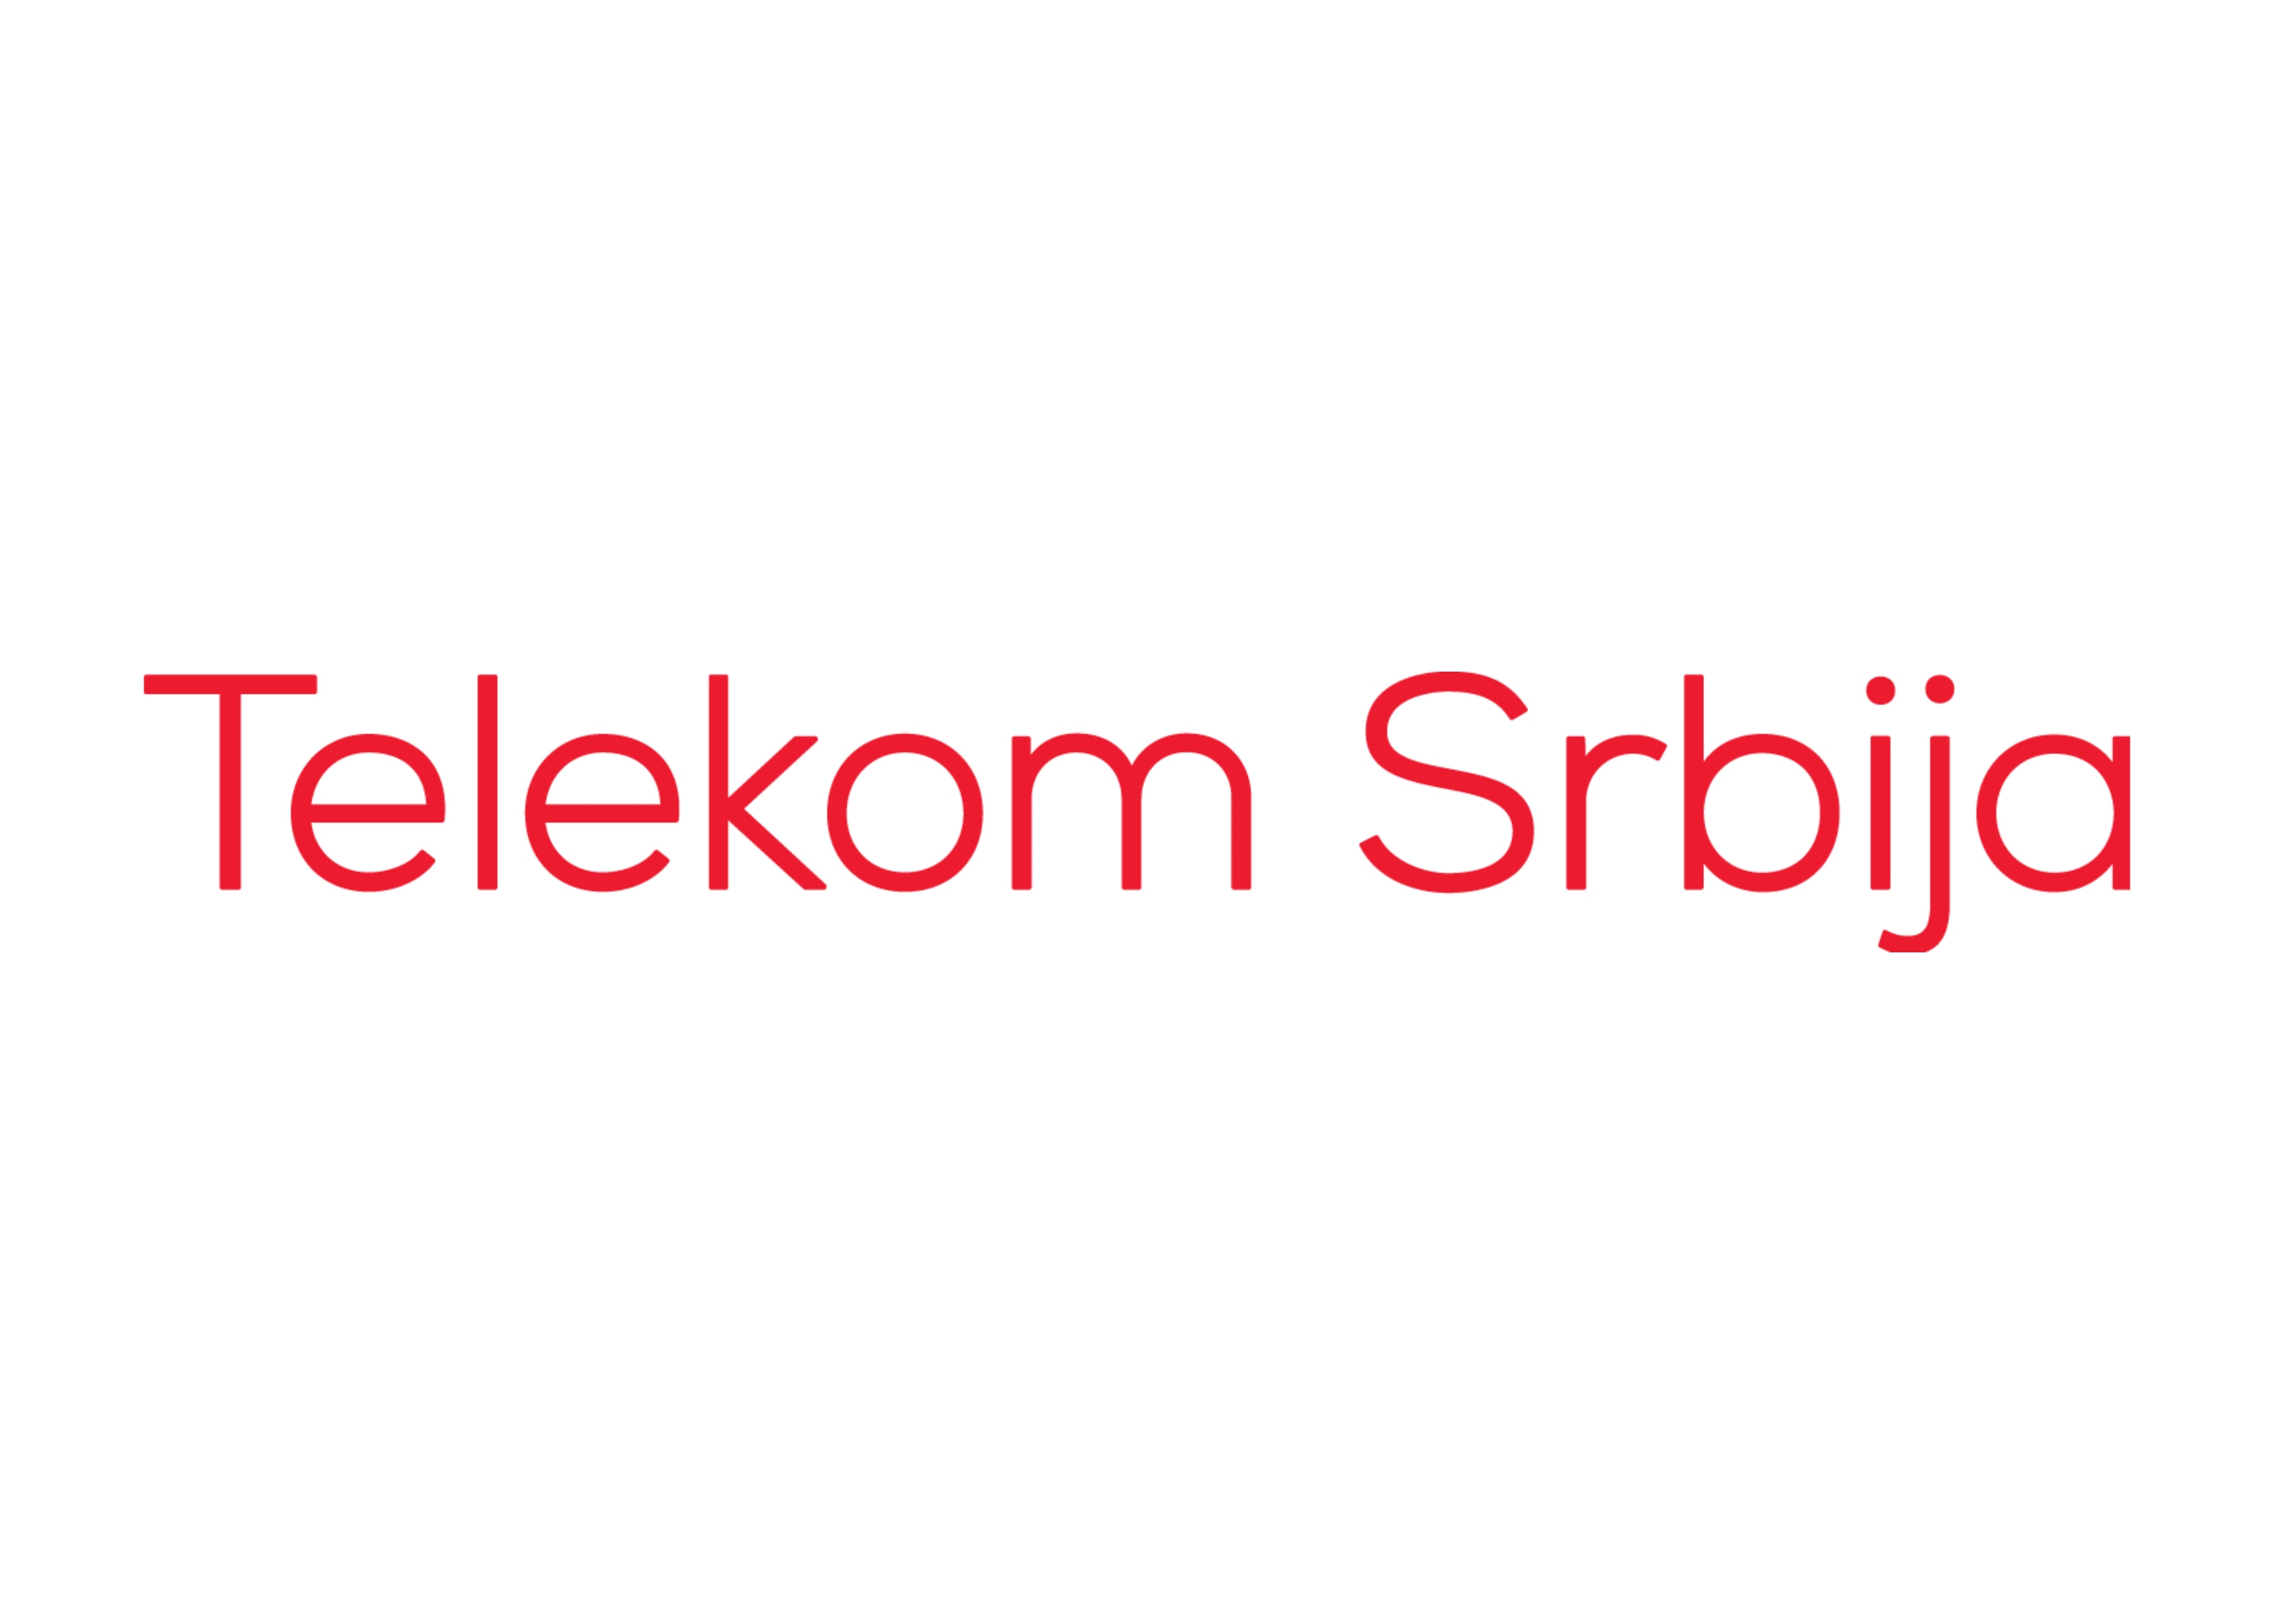 Welcome back Telekom Srbija - our renewing Premium Plus member